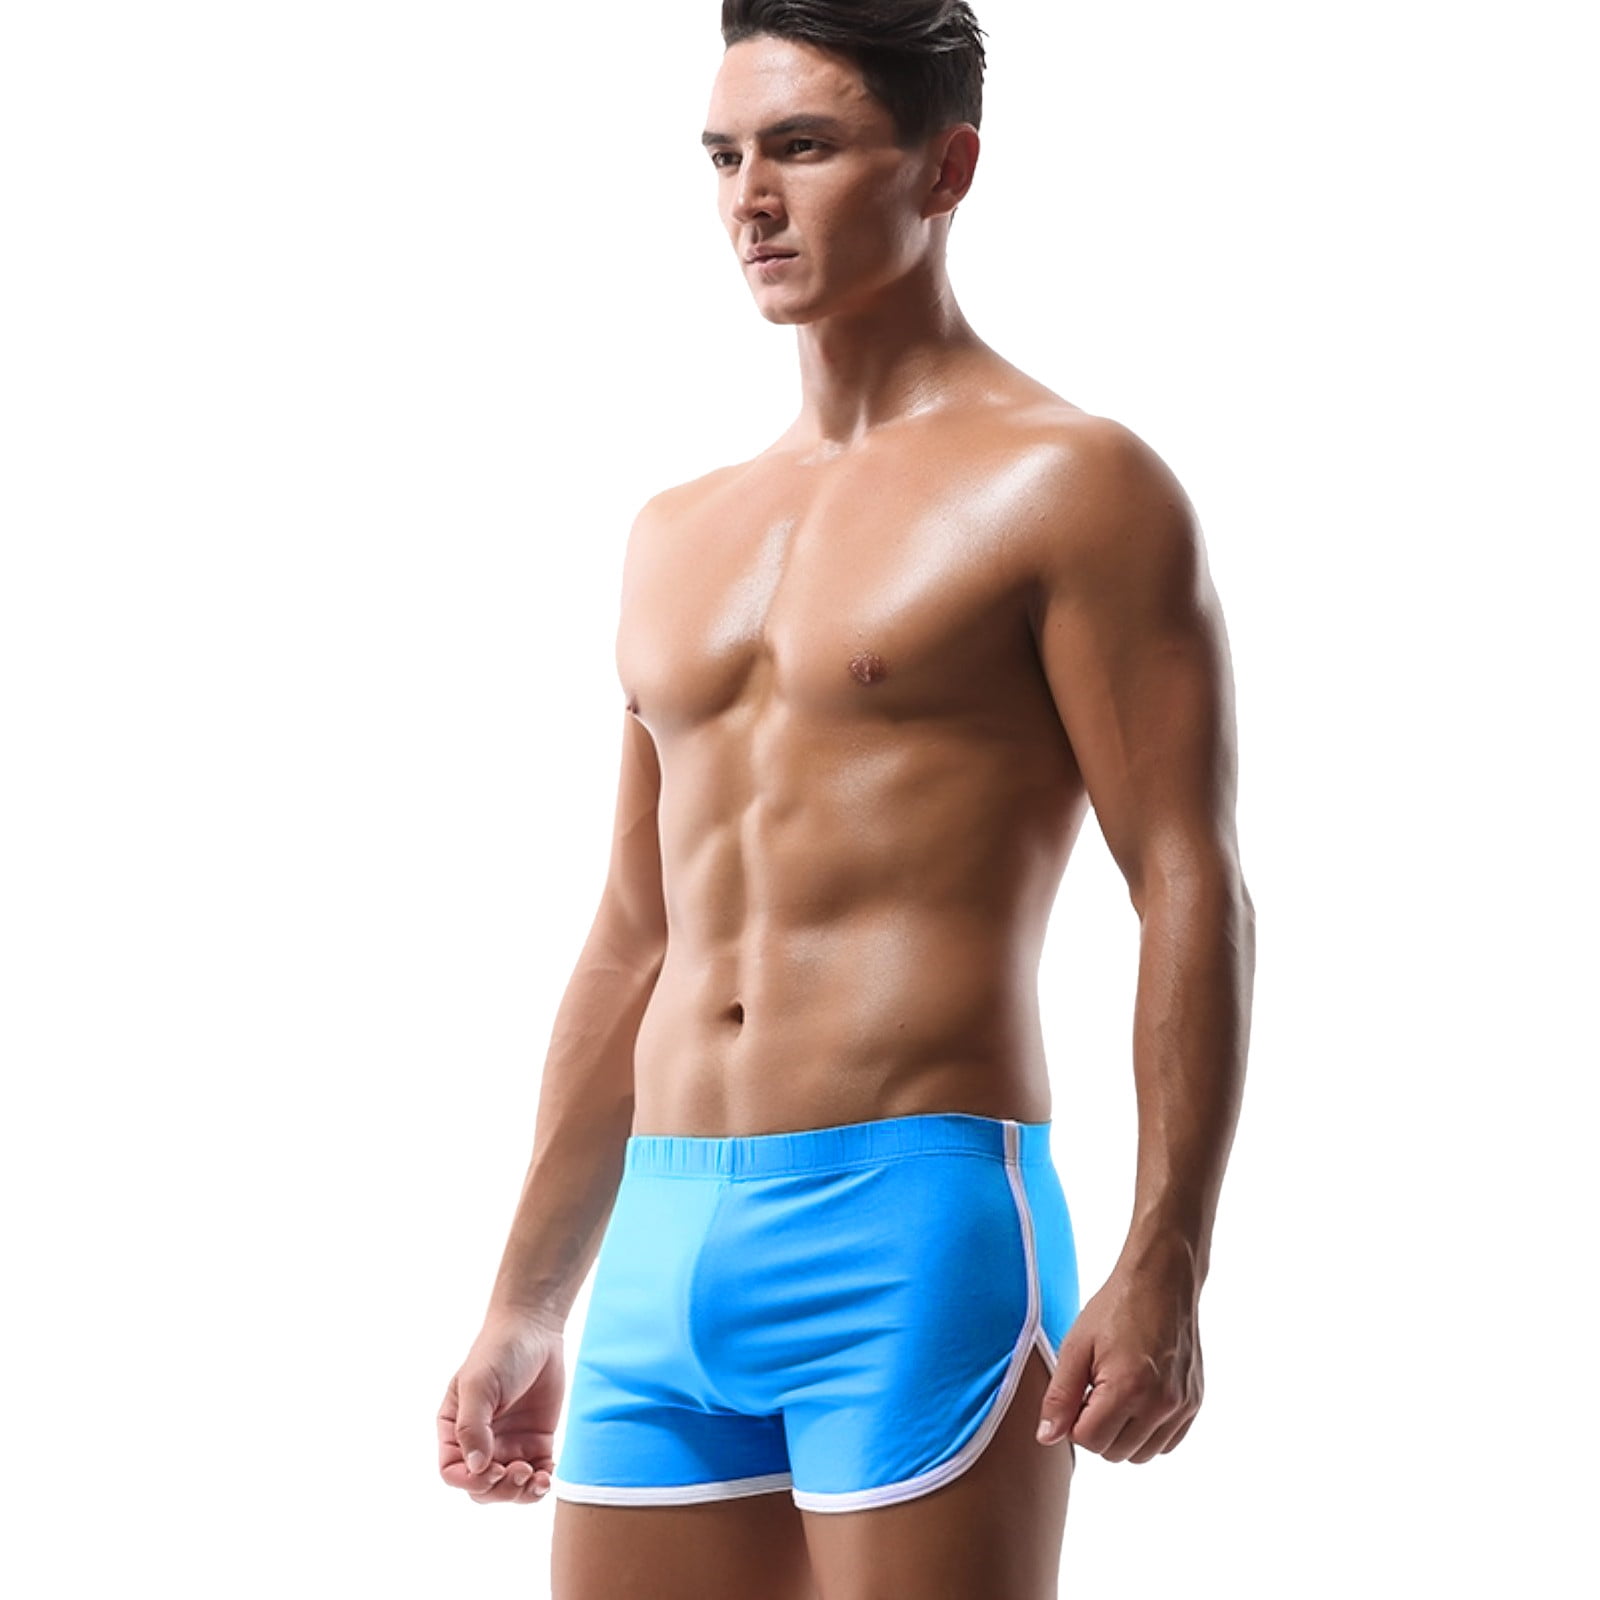 LEEy-world Mens Underwear Men's Novelty Boxer Briefs Comfy Funny